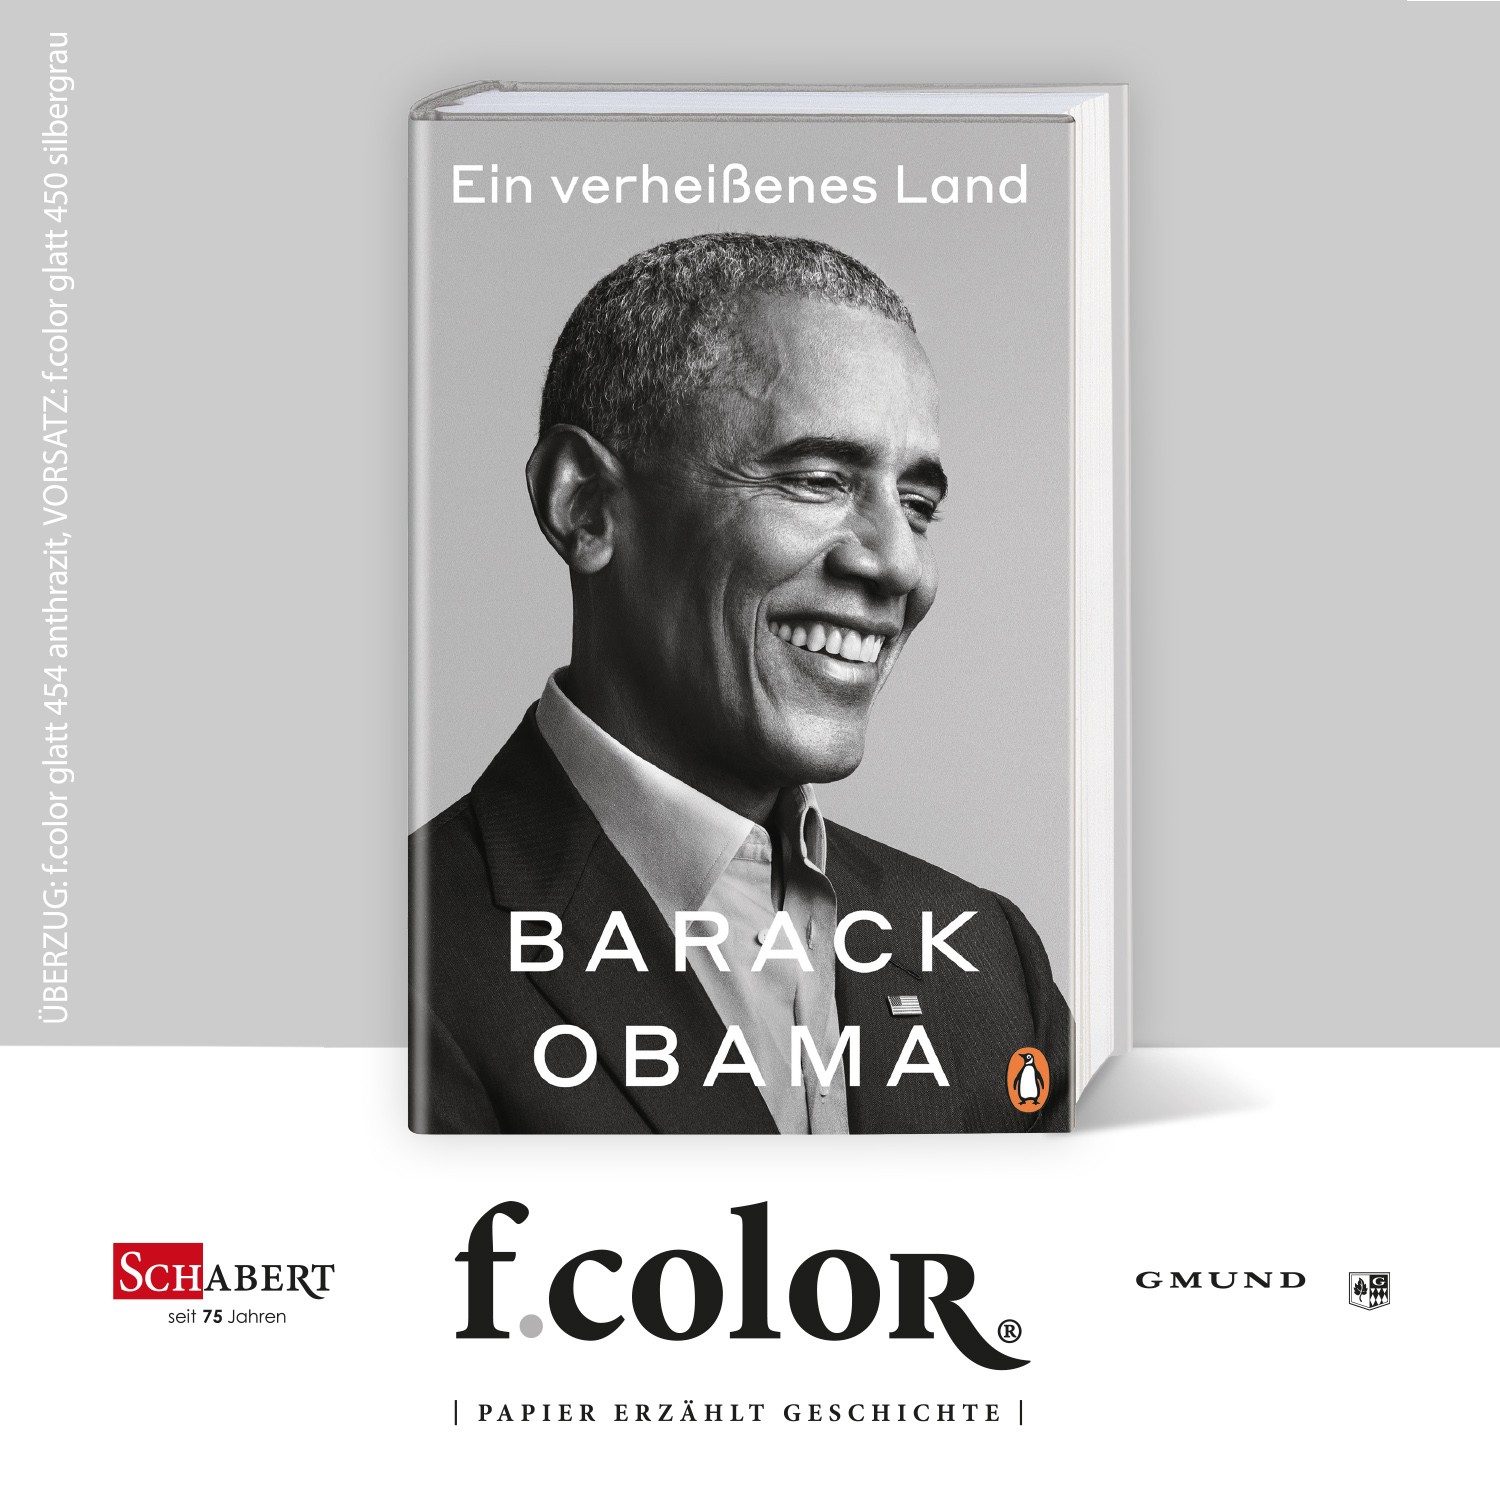 Ein verheißenes Land Autor: Barack Obama, Verlag: Penguin Random House
Überzug: Papier, f.color glatt 454 anthrazit, Vorsatz: f.color glatt 450 silbergrau